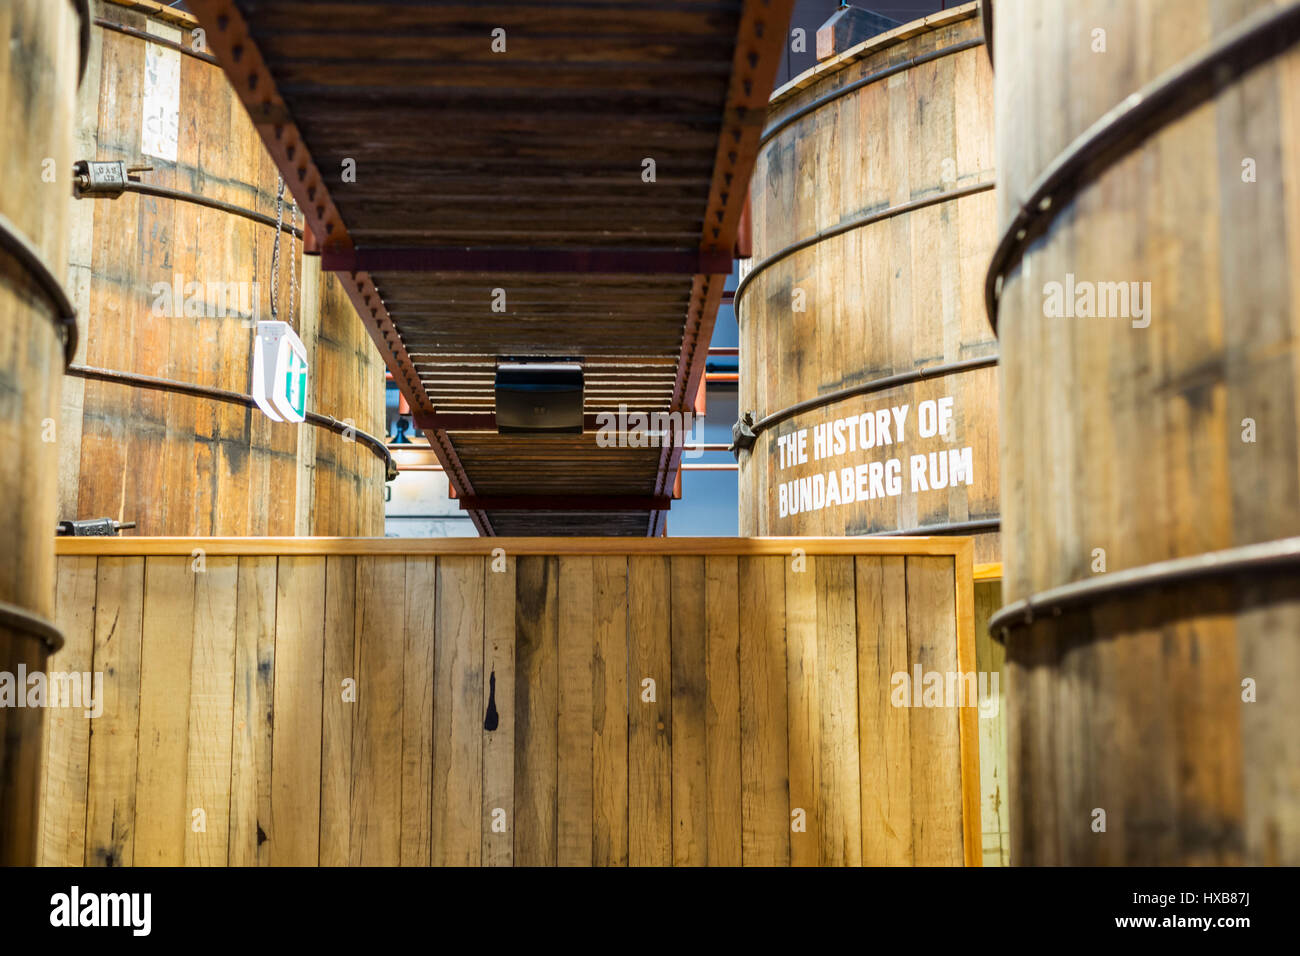 Il Rum cisterne convetered alla storia presenta nella distilleria Bundaberg Rum Visitor Center. Bundaberg, Queensland, Australia Foto Stock